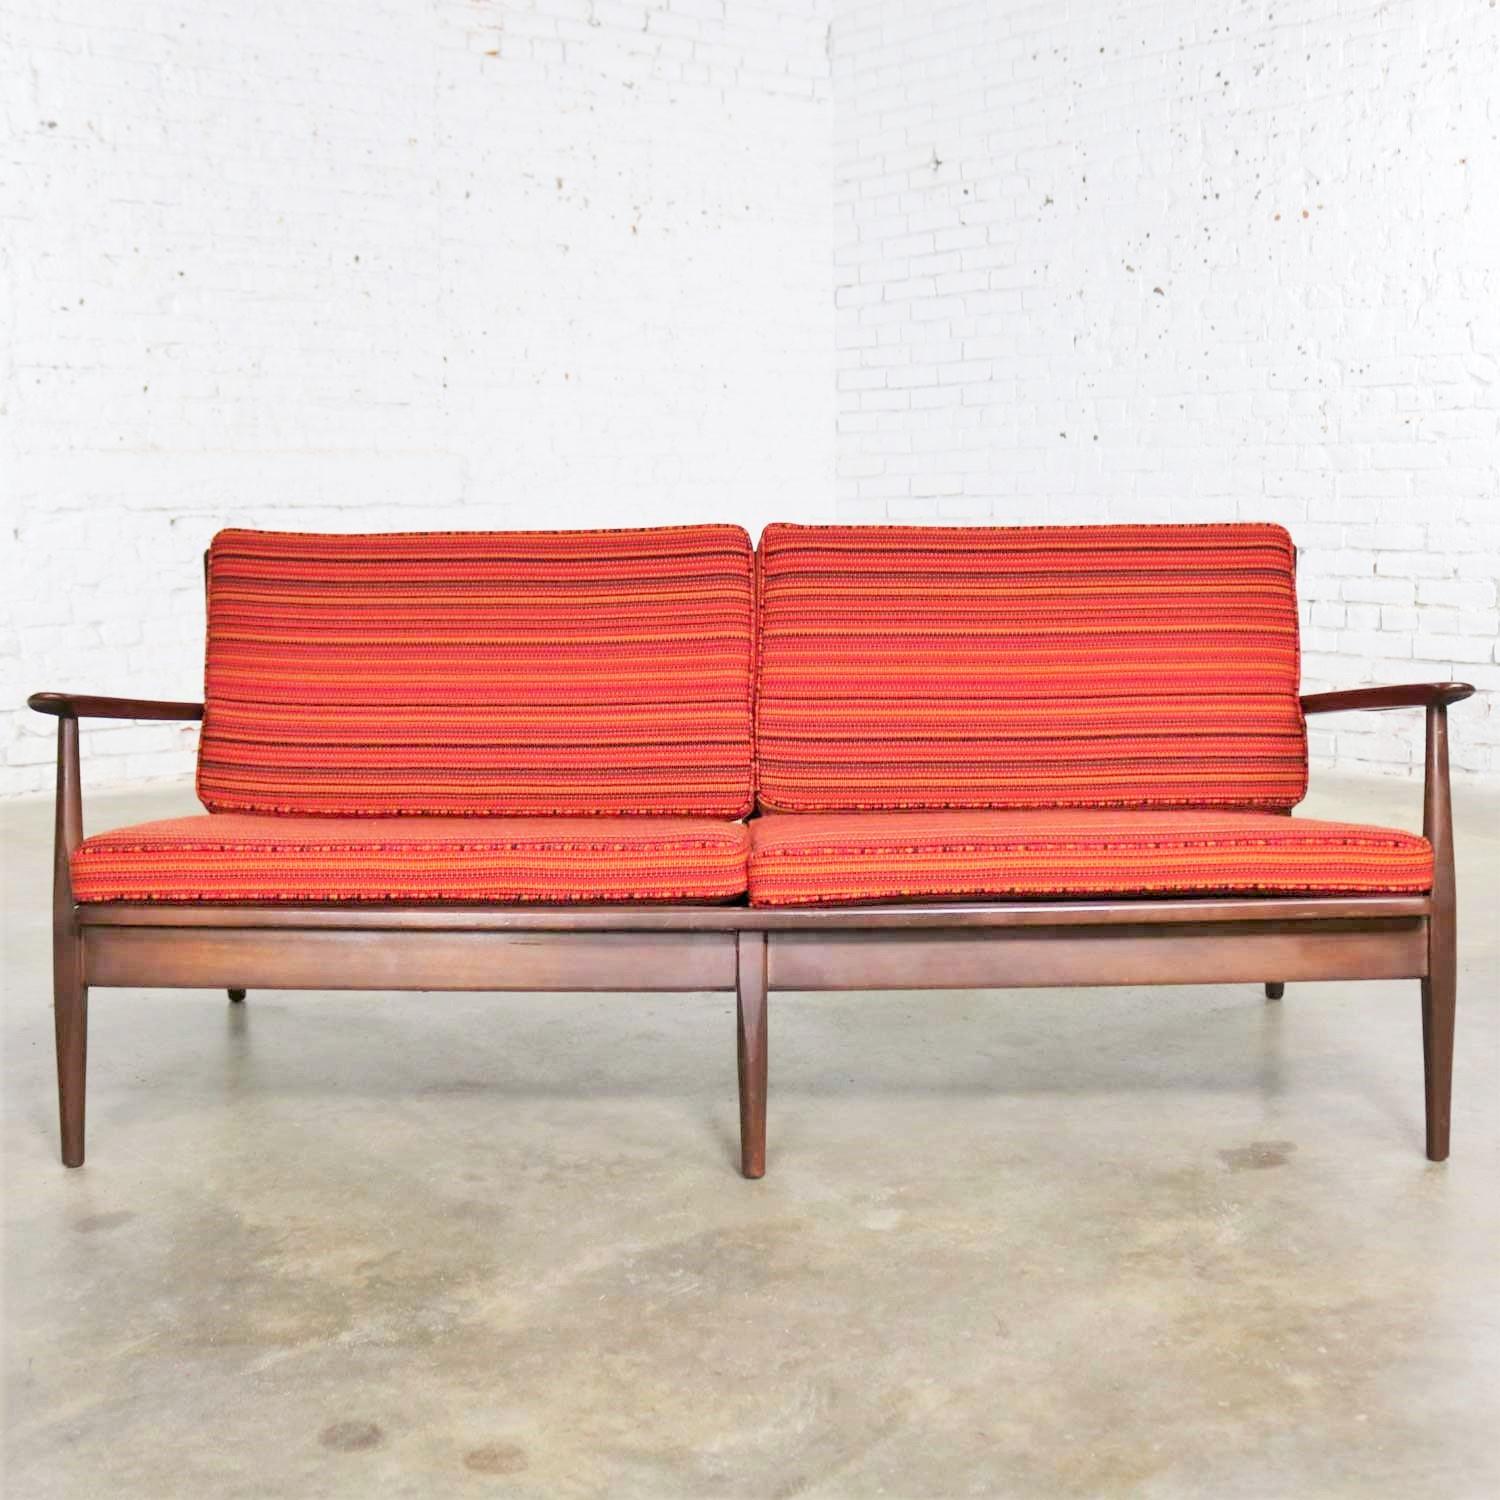 20th Century Danish or Scandinavian Modern Loose Cushion Sofa New Red Stripe Upholster